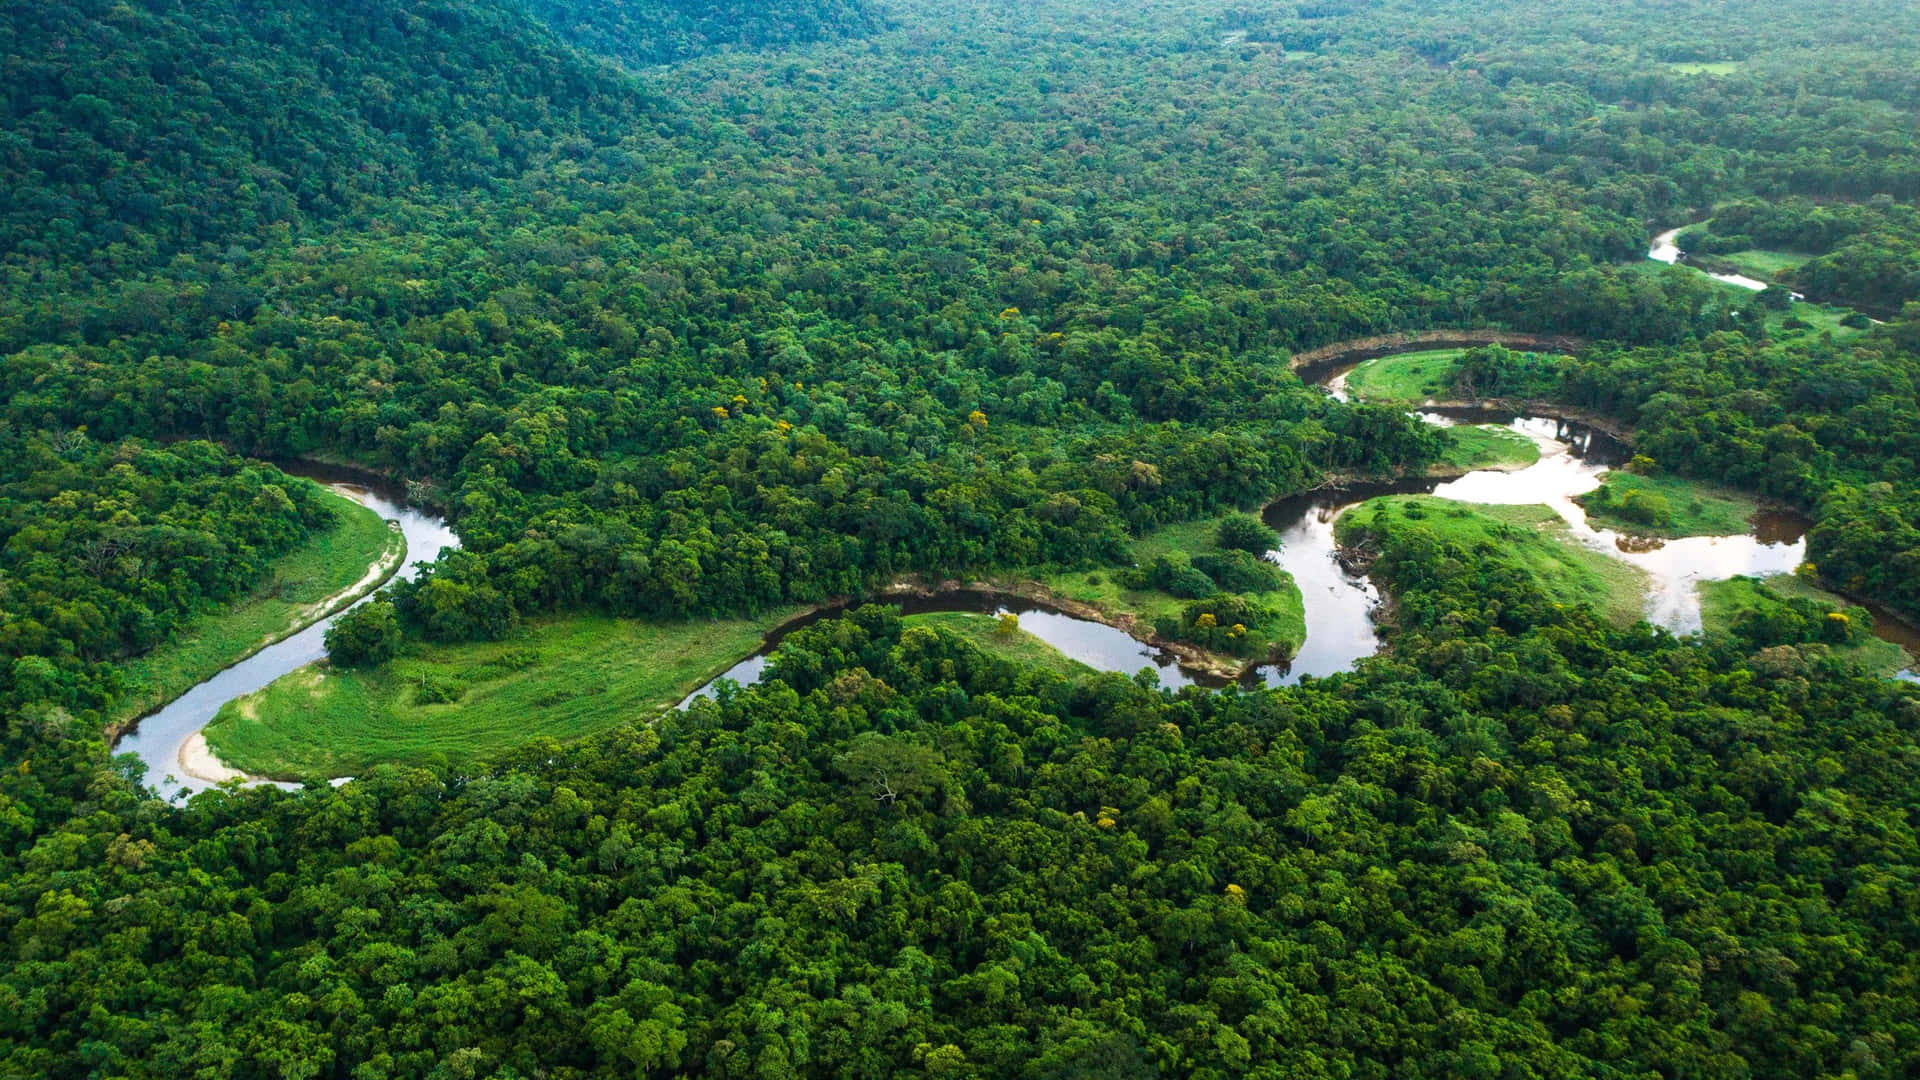 The Mystical Beauty of a Rainforest